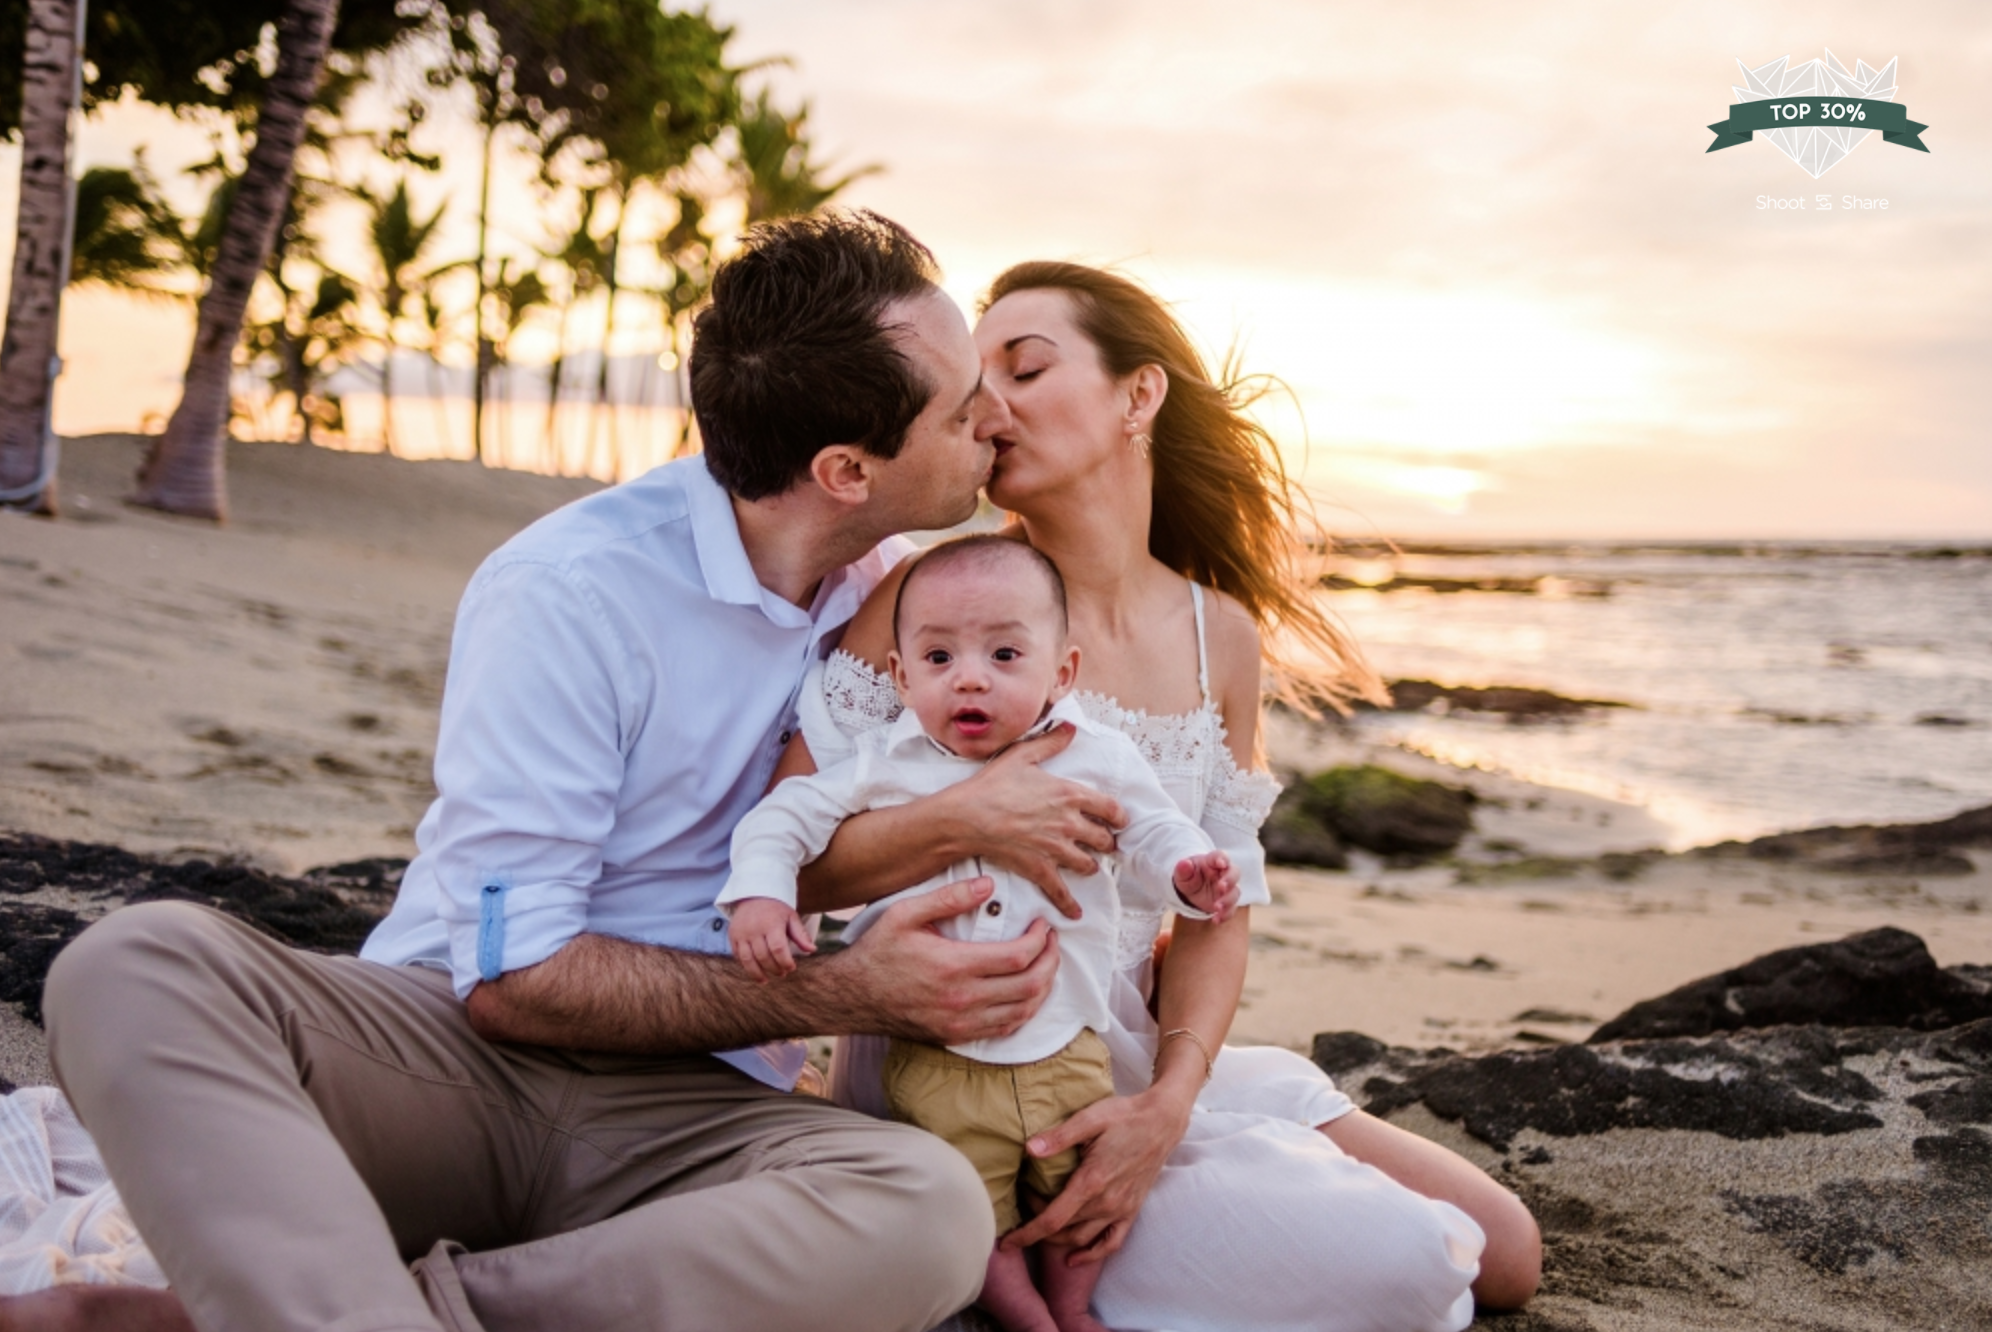 Shoot-Share-Contest-2018-Waikoloa-Hawaii-Top-30-Family-photographer.png